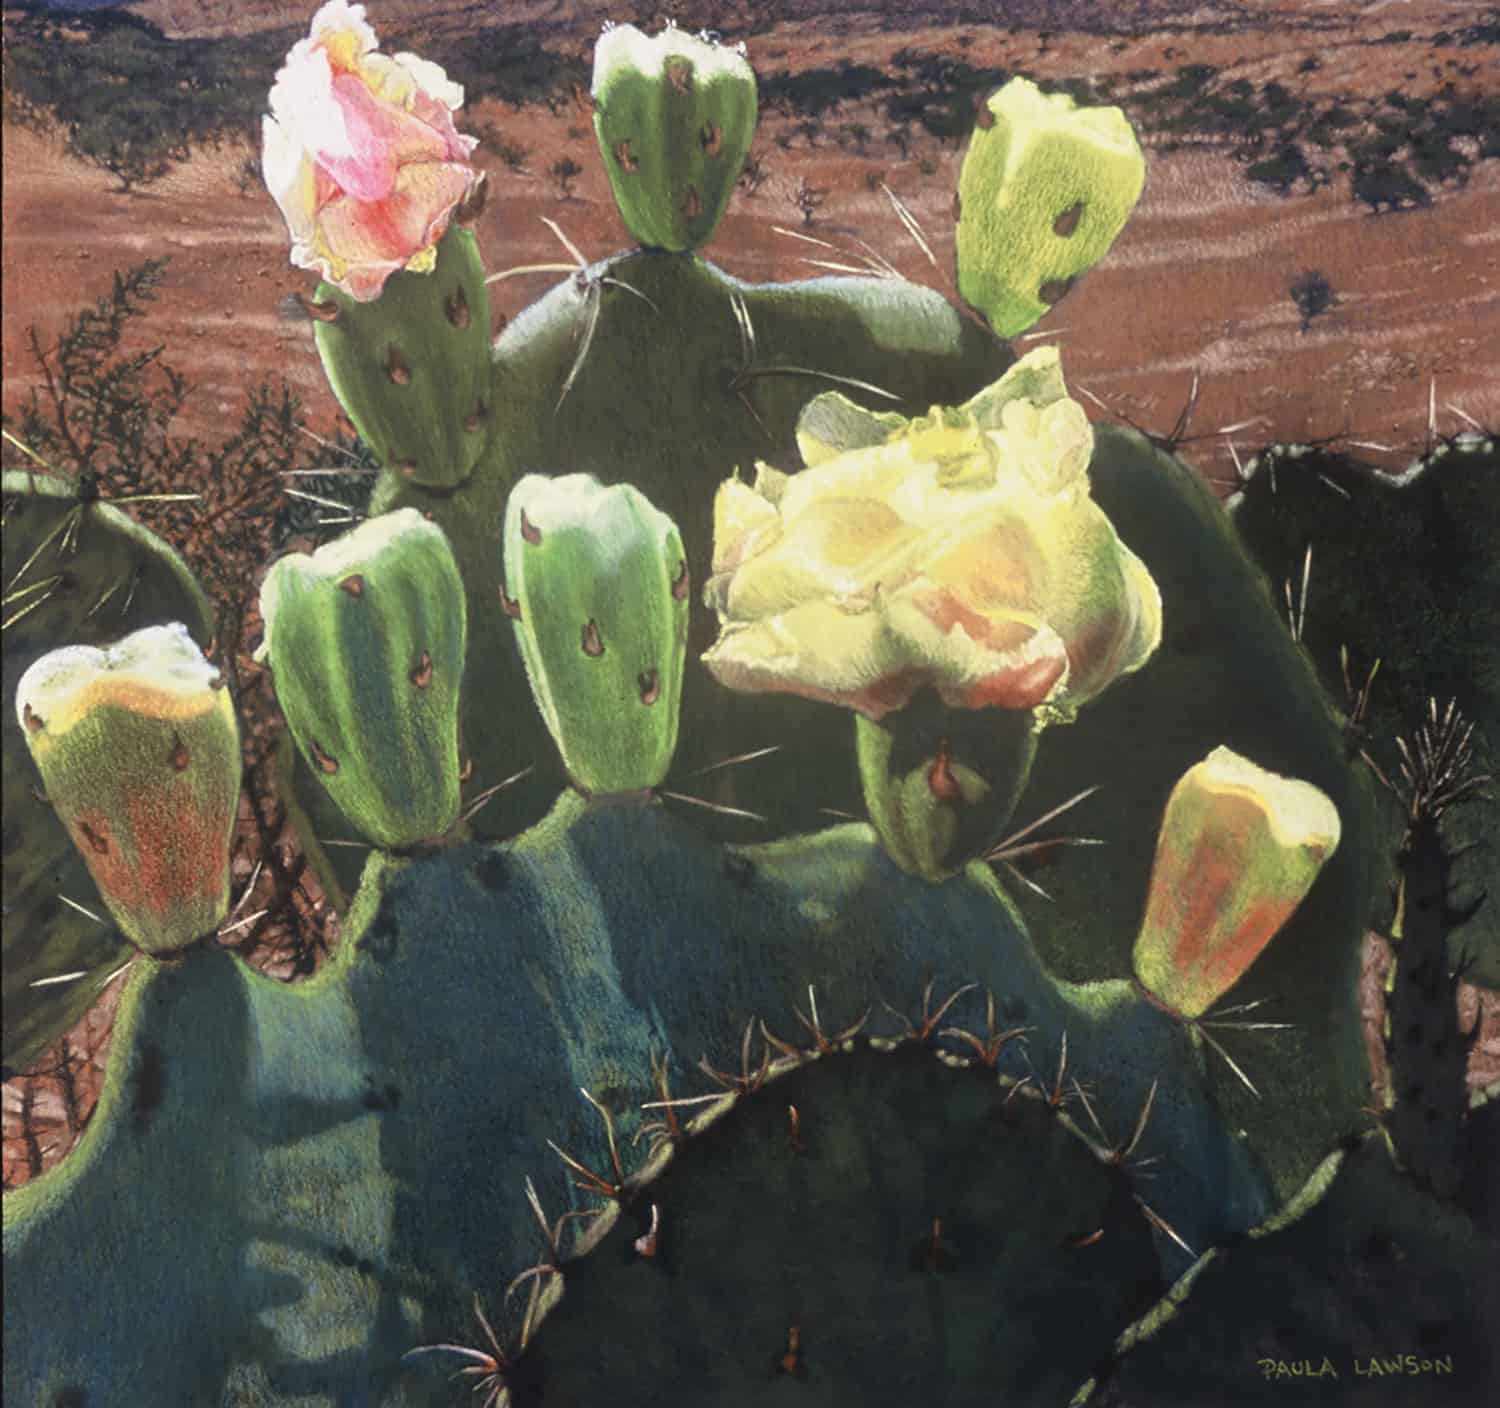 Big Bend Prickly Pear Blooms ⋆ Paula Lawson - Pastel Landscape Artist